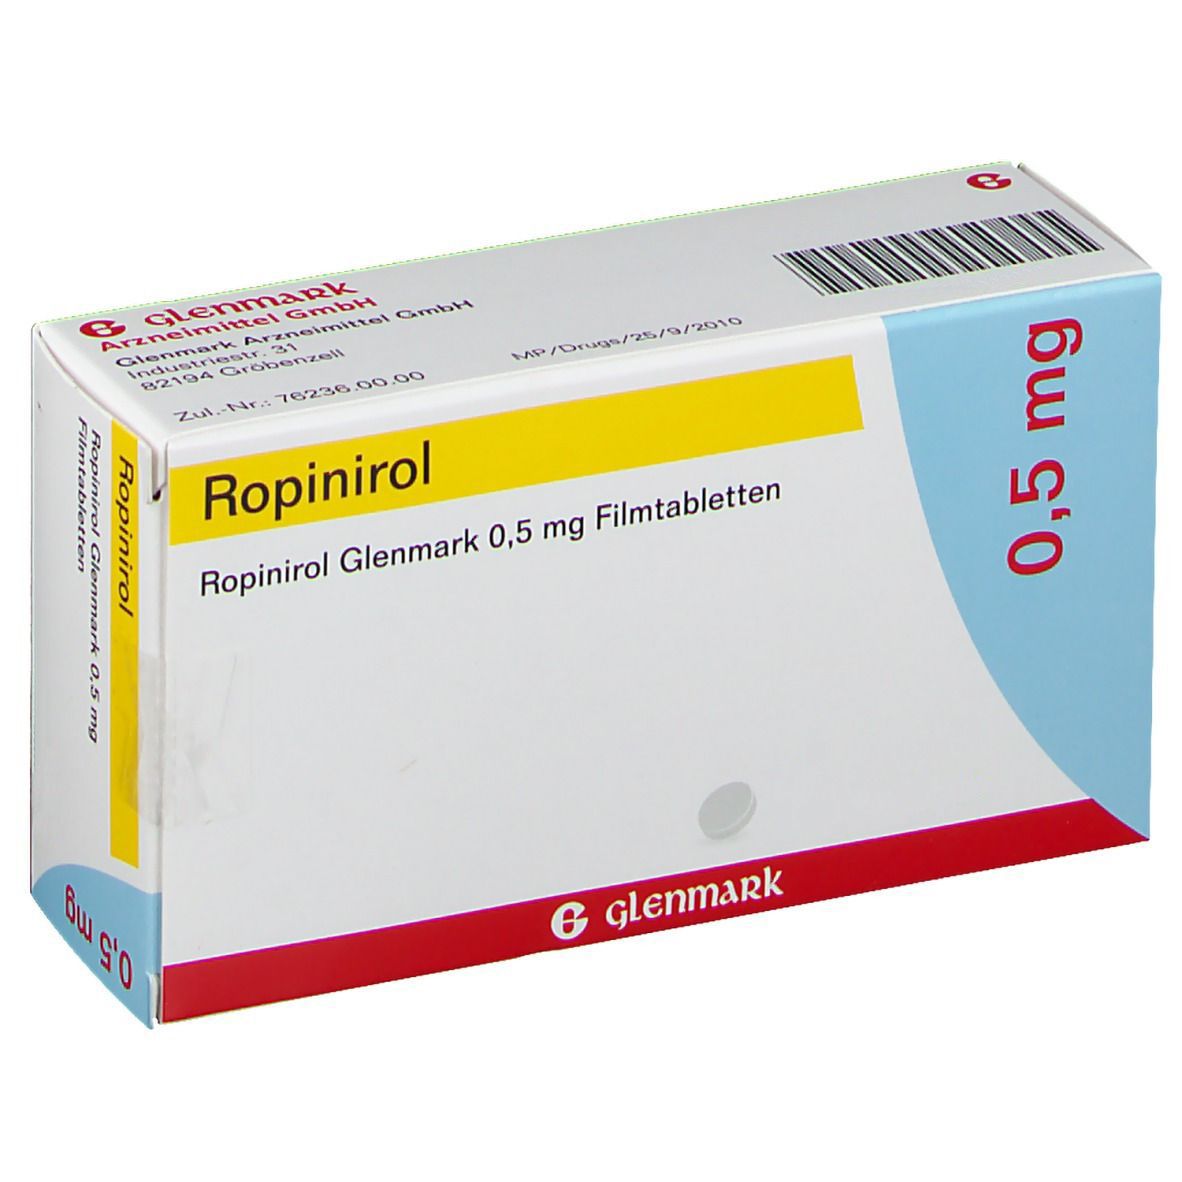 Ropinirol Glenmark 0,5 mg